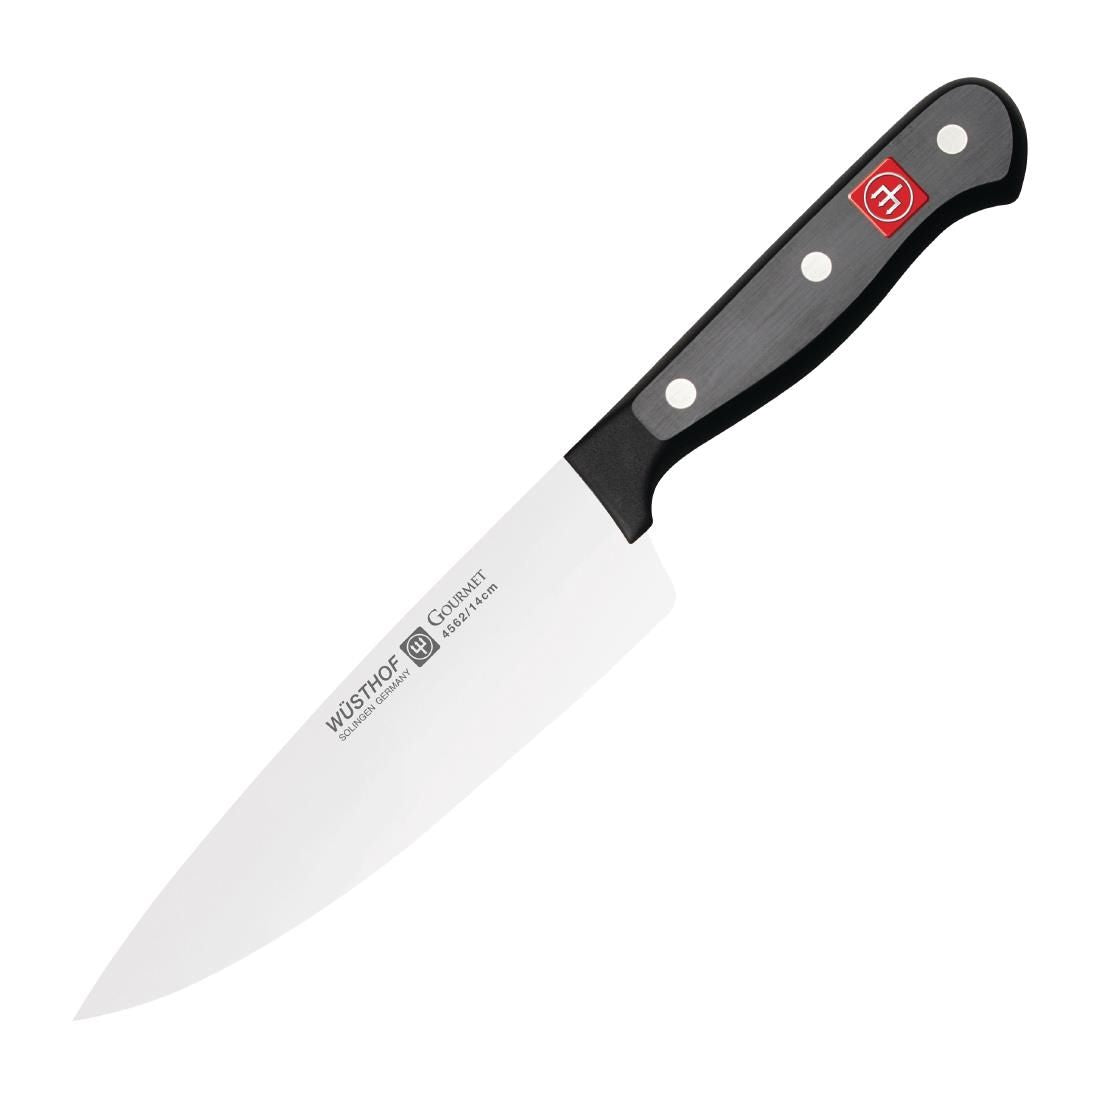 FE195 Wusthof Gourmet Chef Knife 6.5"